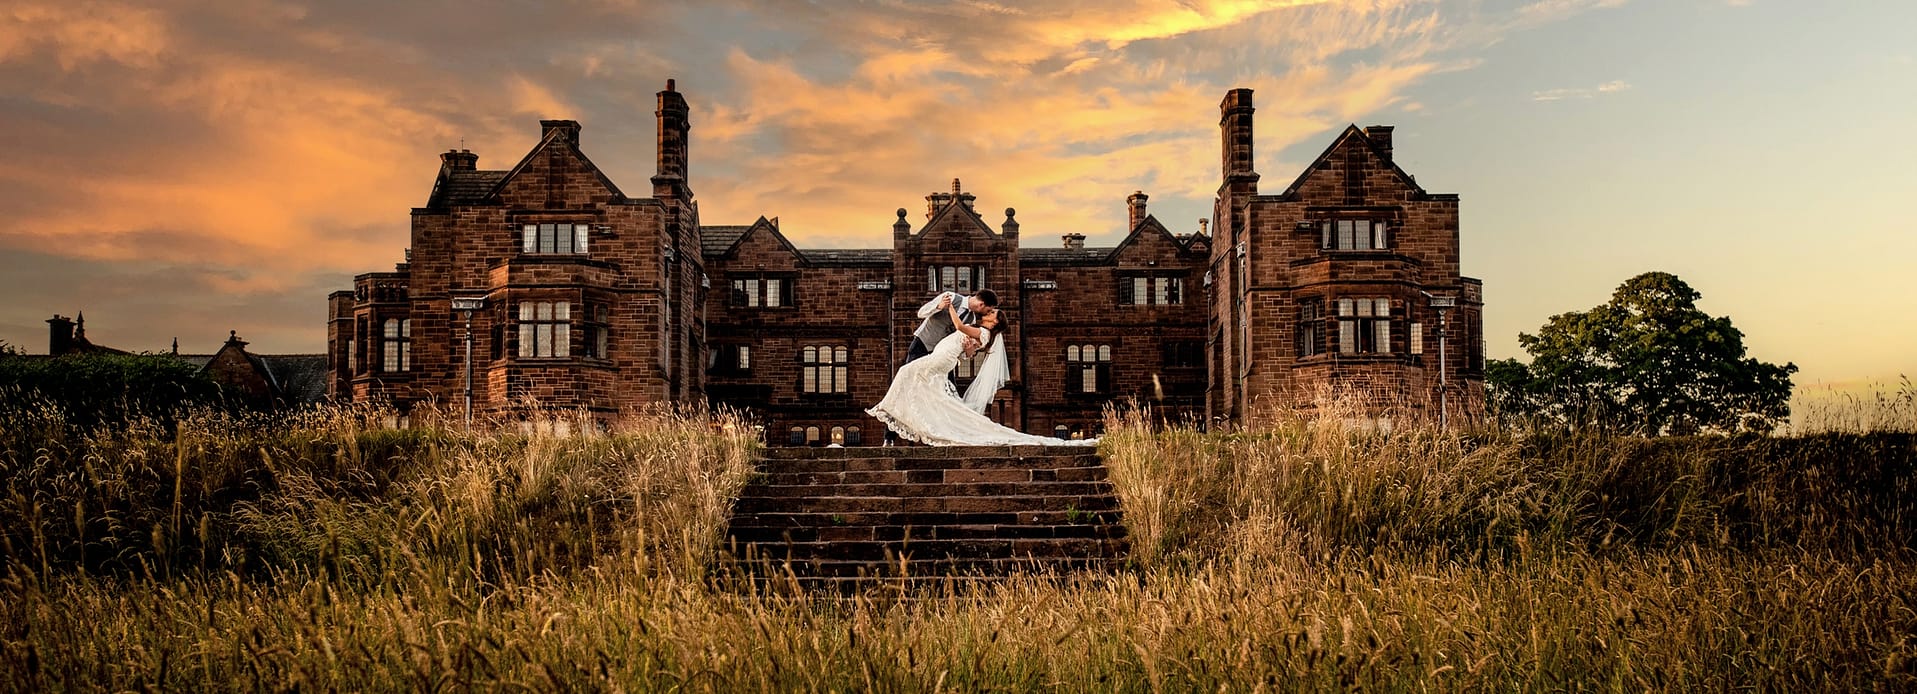 Thornton Manor wedding photography